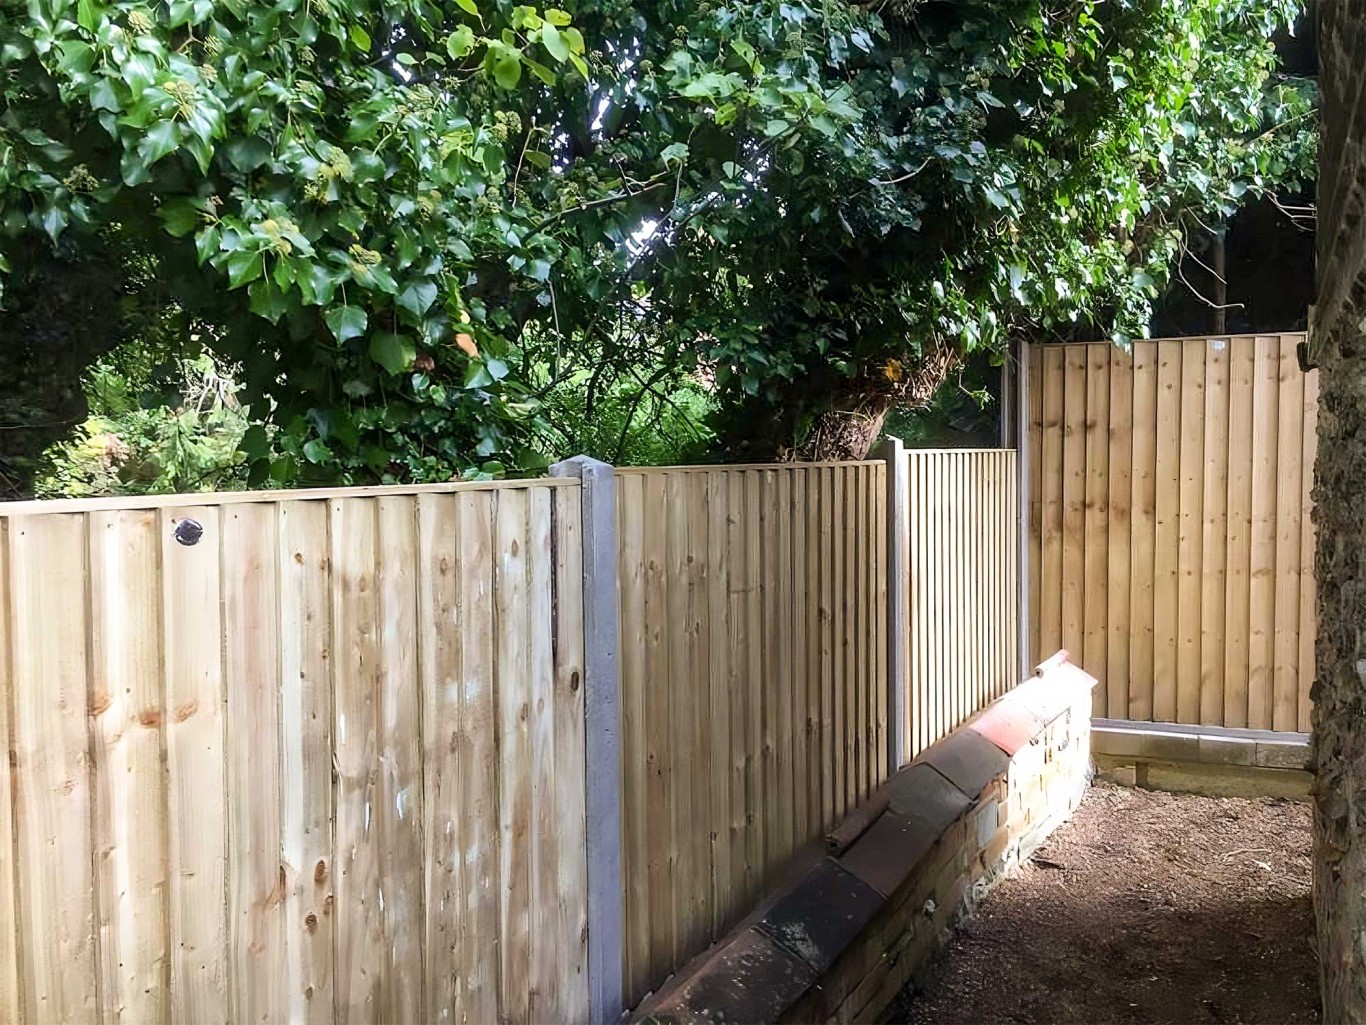 Panel fencing running through garden and along bottom.